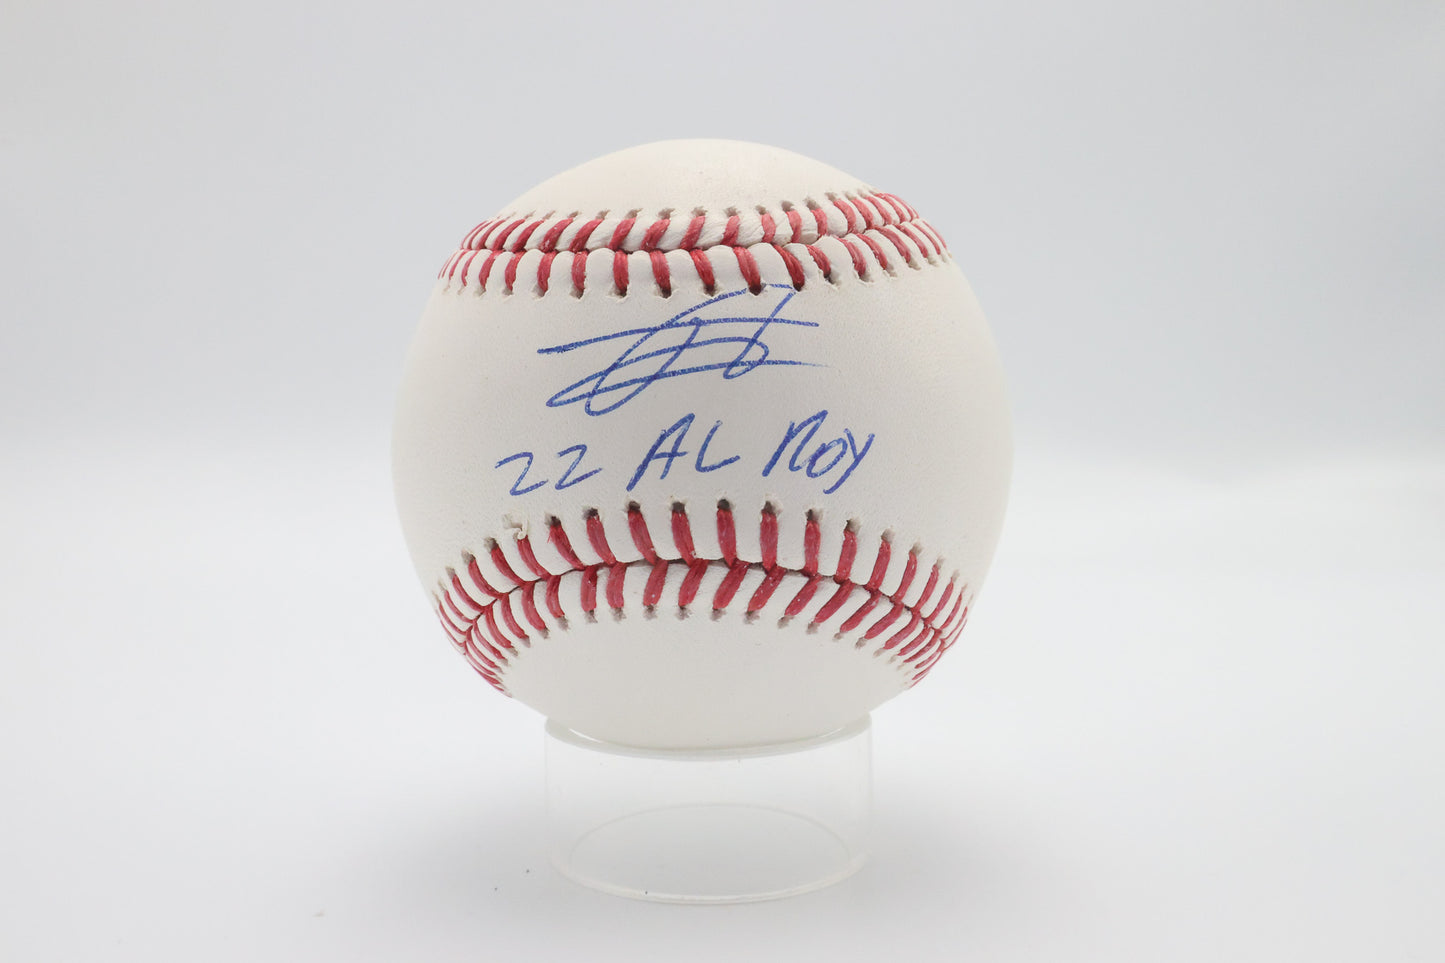 Julio Rodriguez Autographed Seattle Mariners Baseball "2022 AL ROY" Inscription